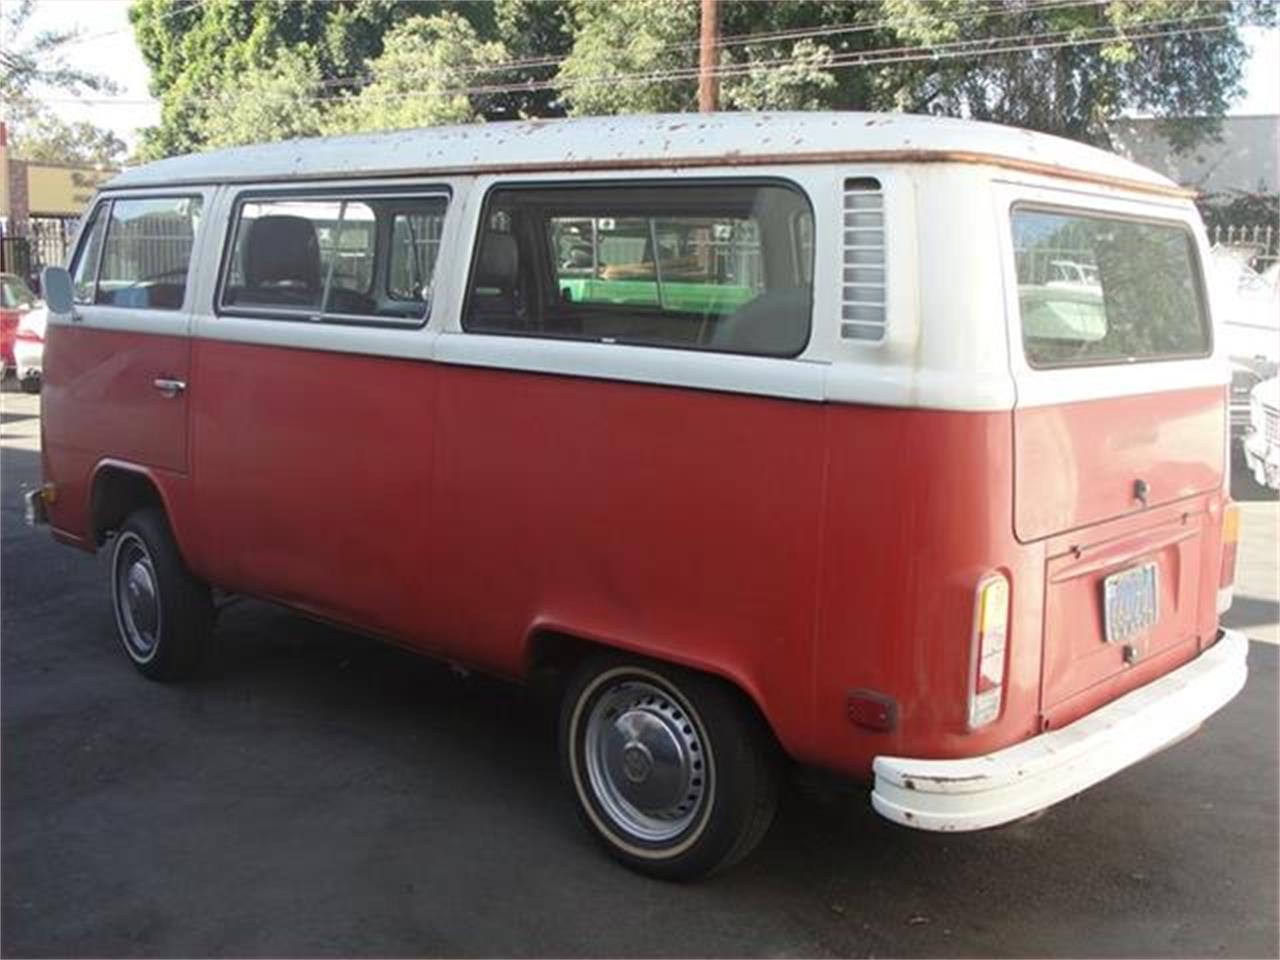 1979 Volkswagen Bus for Sale | ClassicCars.com | CC-910286